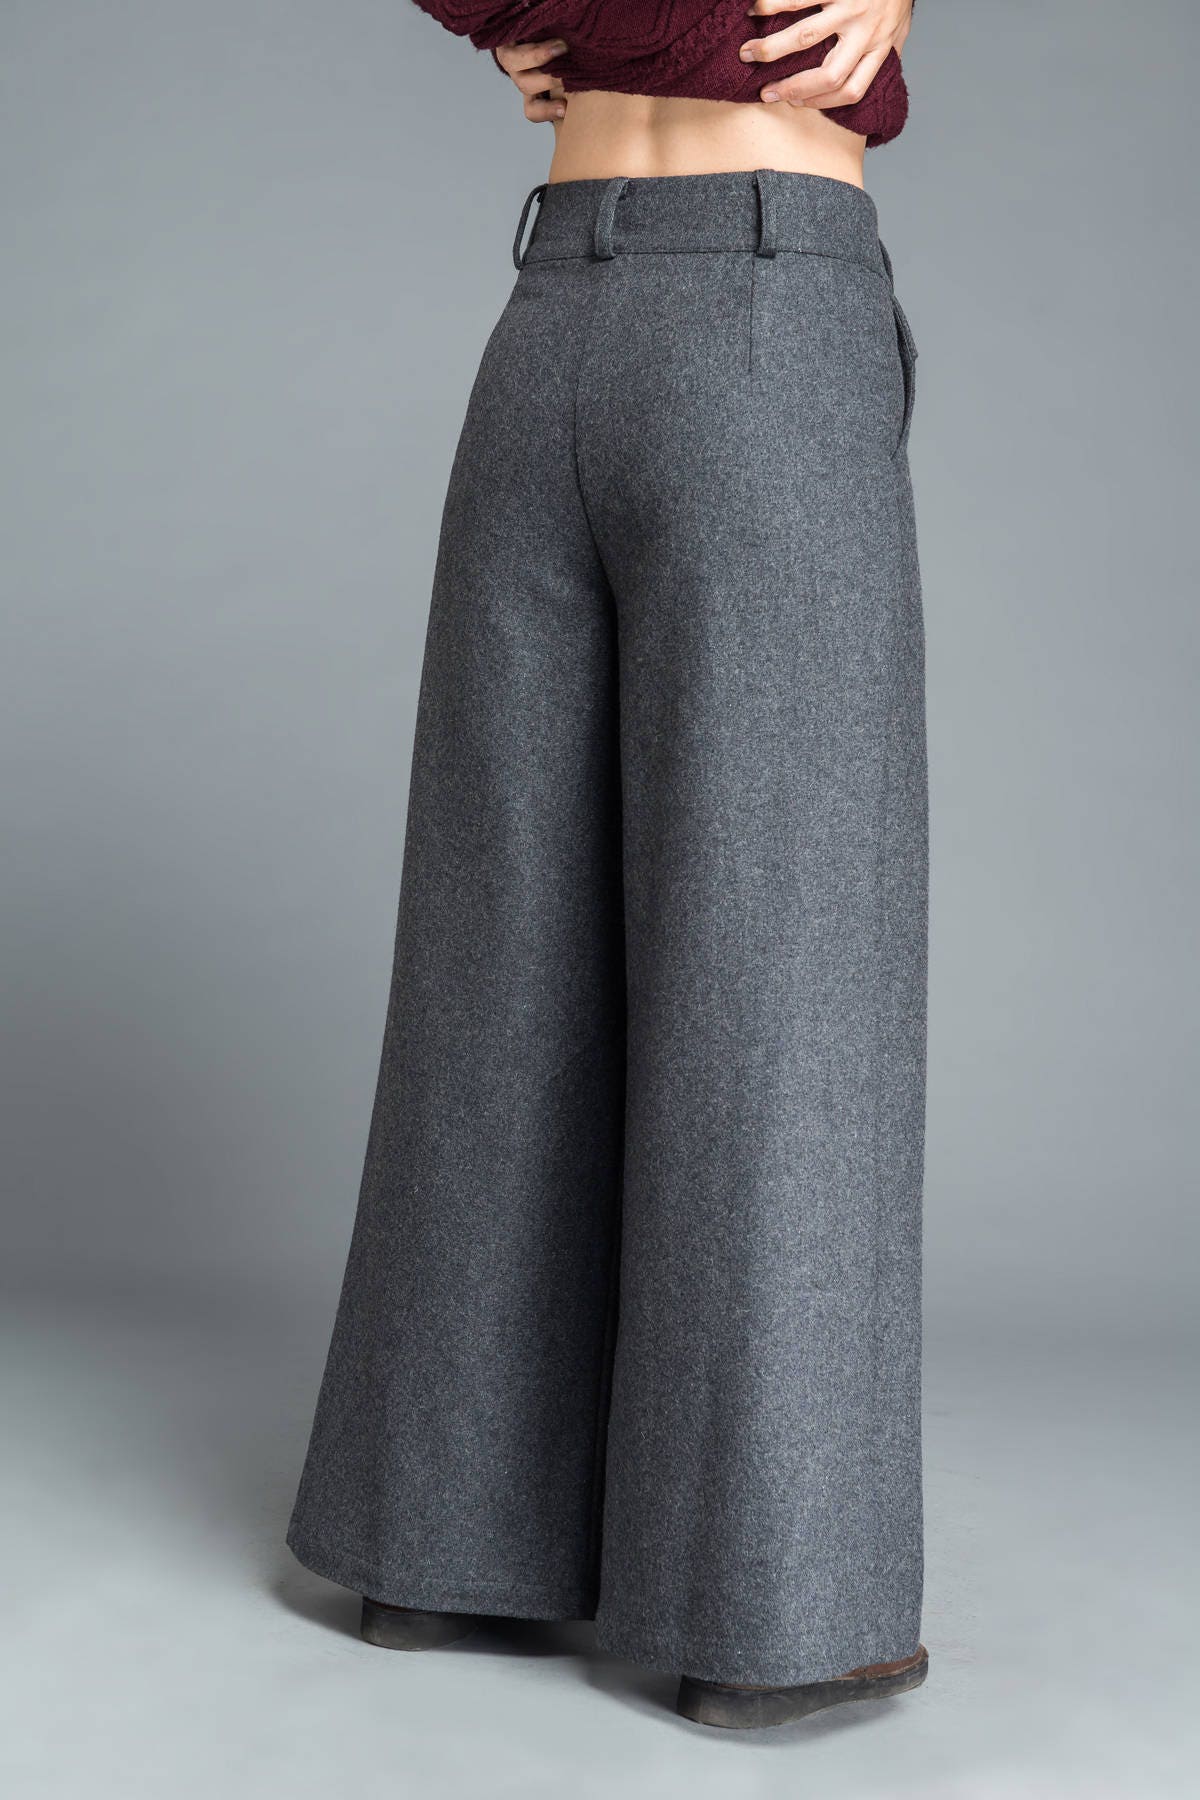 Maxi Pants Gray Pants Wool Pants Winter Womens Pants Warm | Etsy